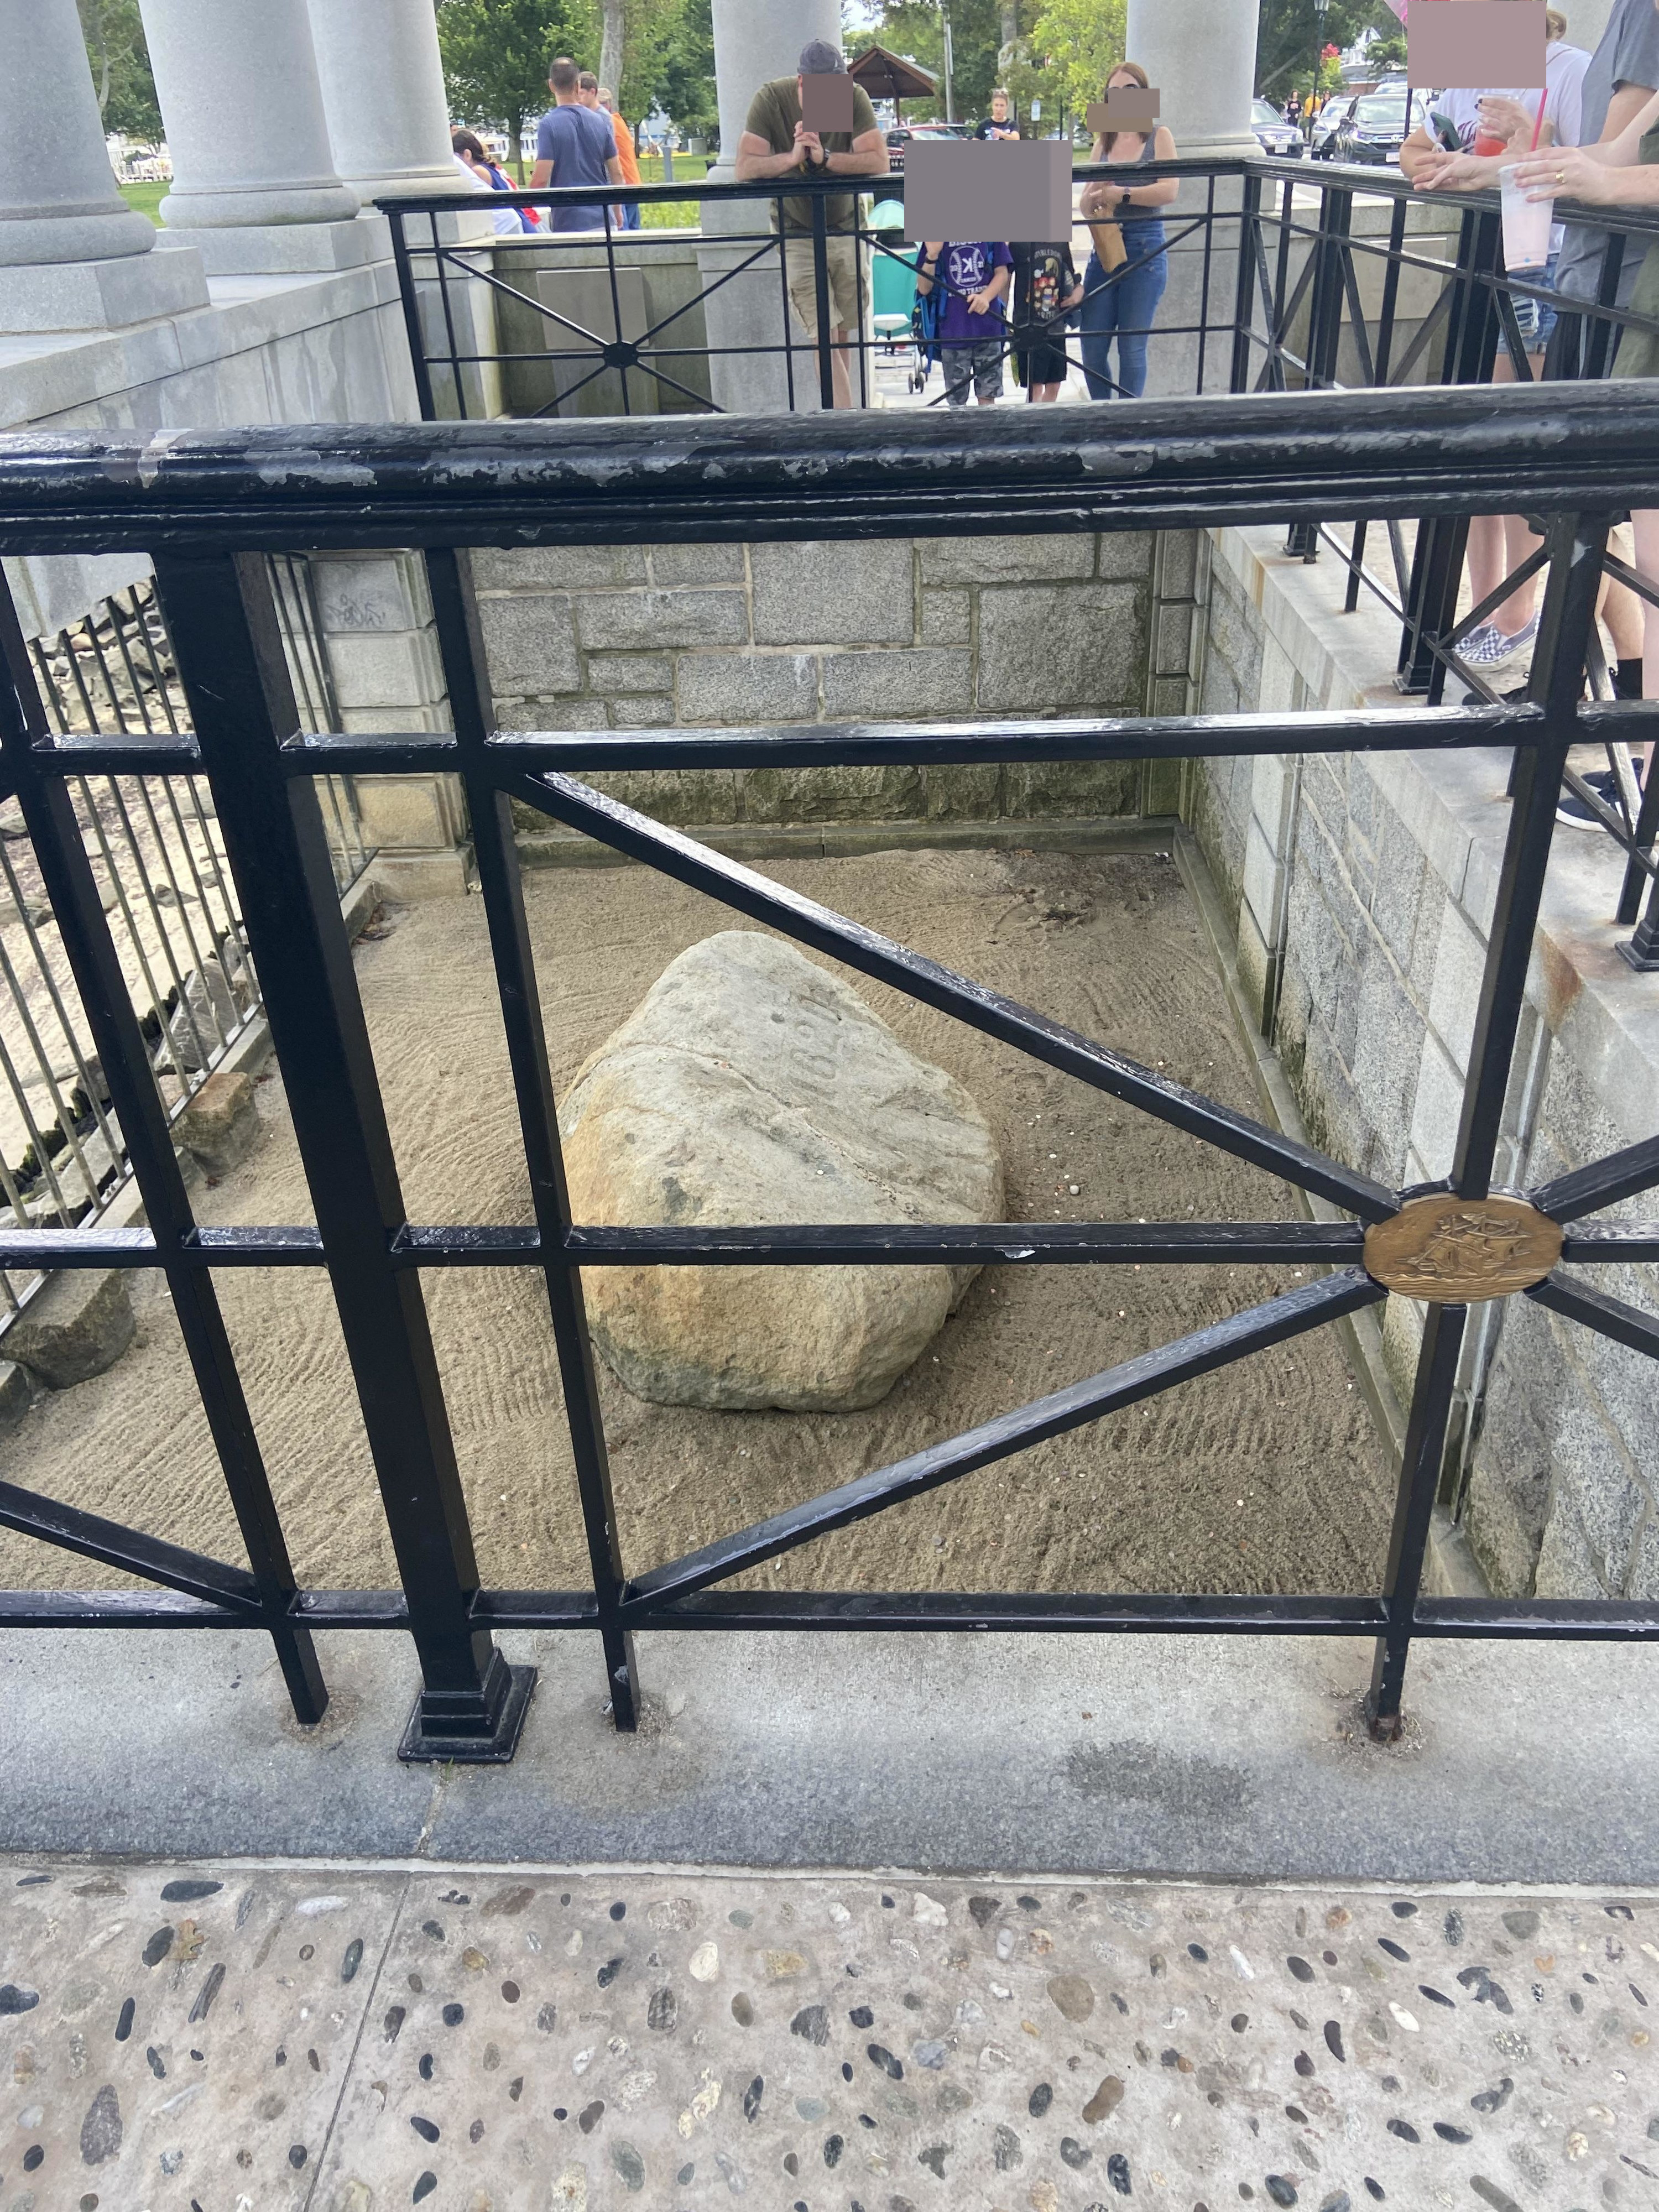 A medium-size rock behind bars